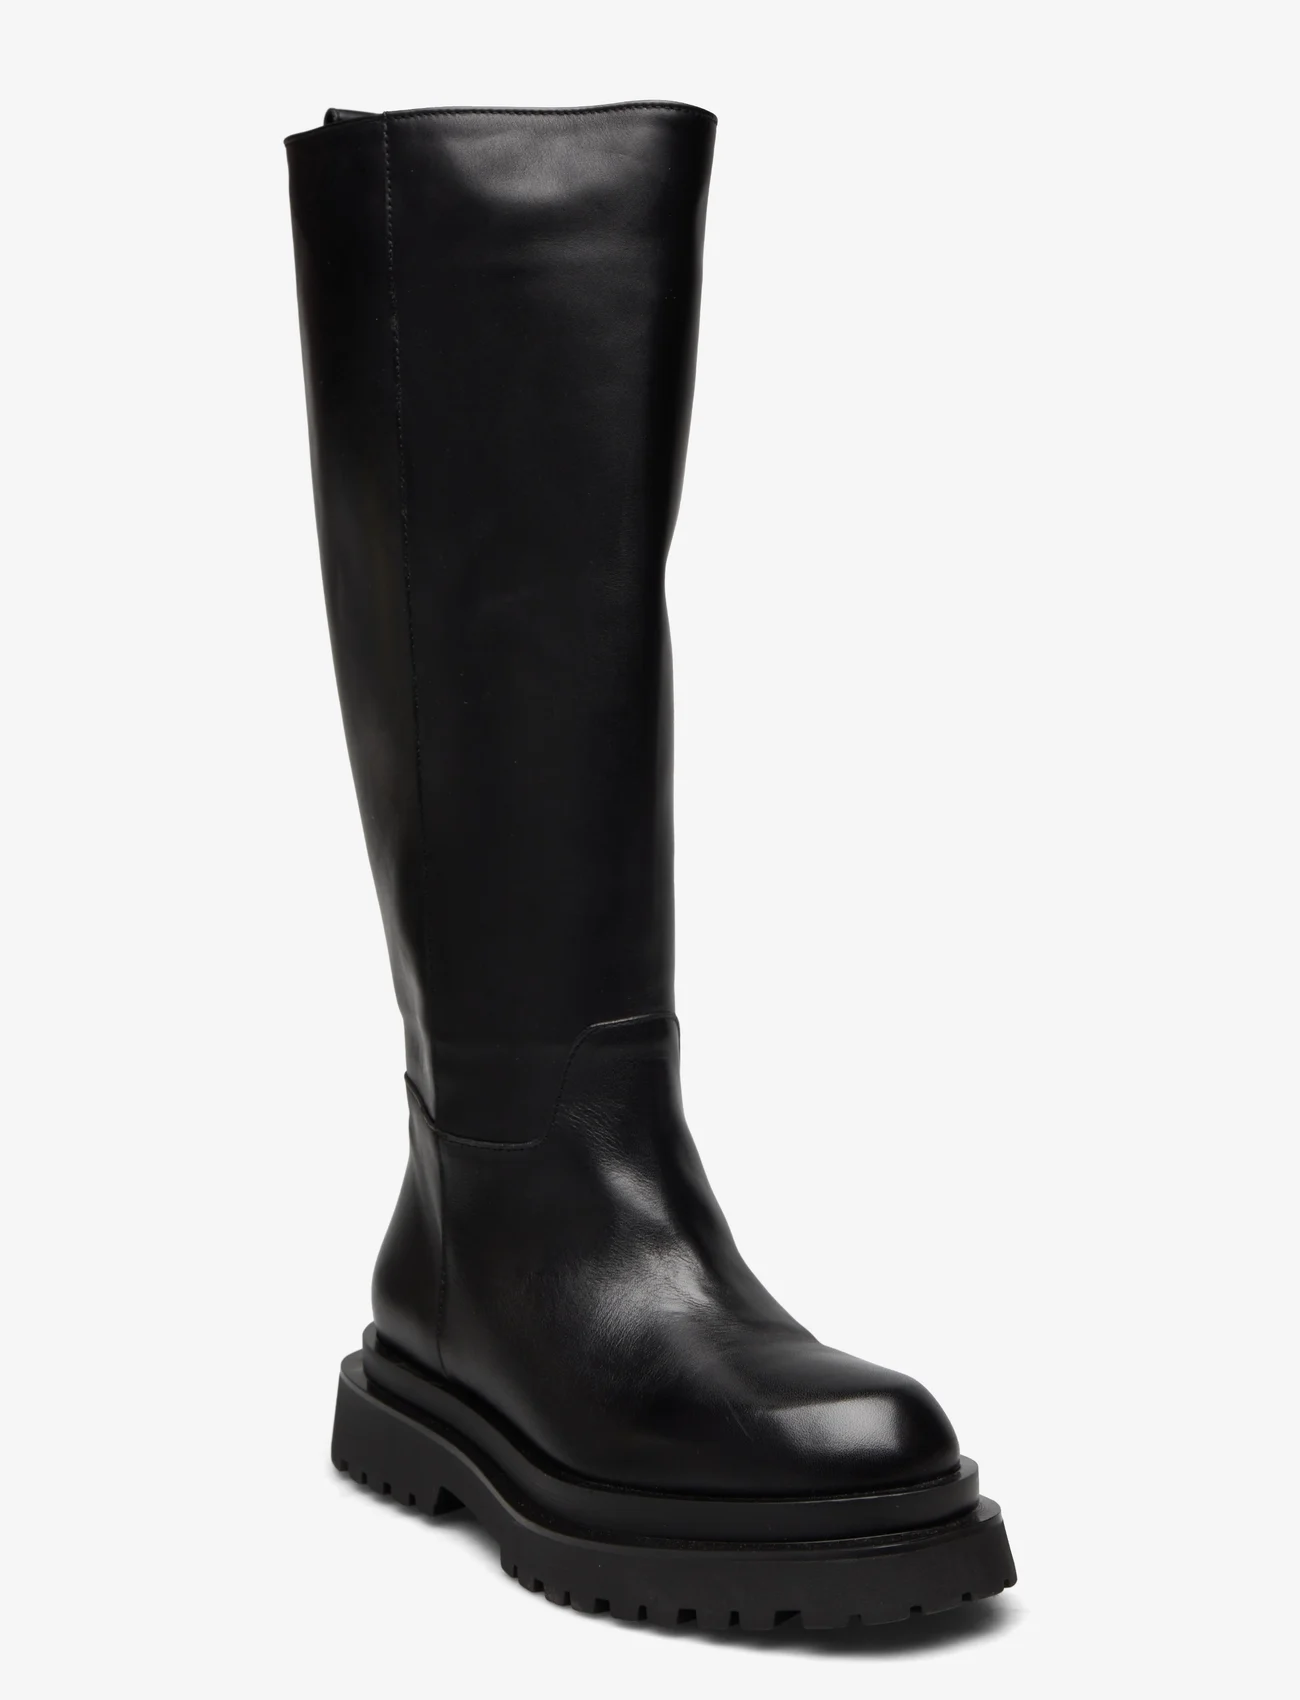 Laura Bellariva - BOOTS - knee high boots - black - 0